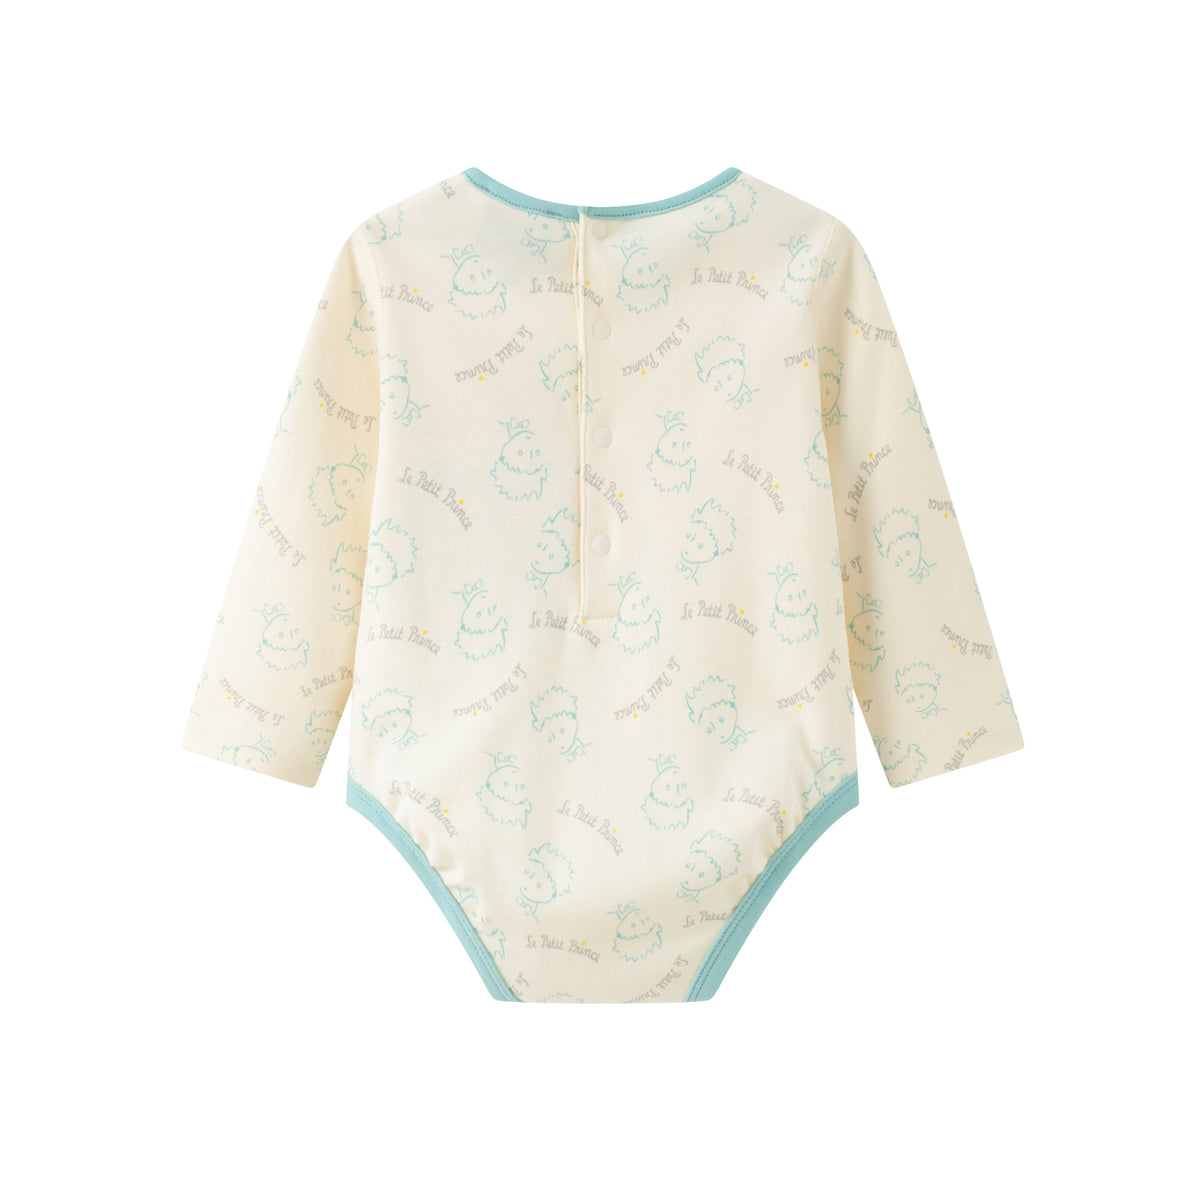 Vauva x Le Petit Prince - Baby Boy Little Prince Full Print Long Sleeve Bodysuit product image back